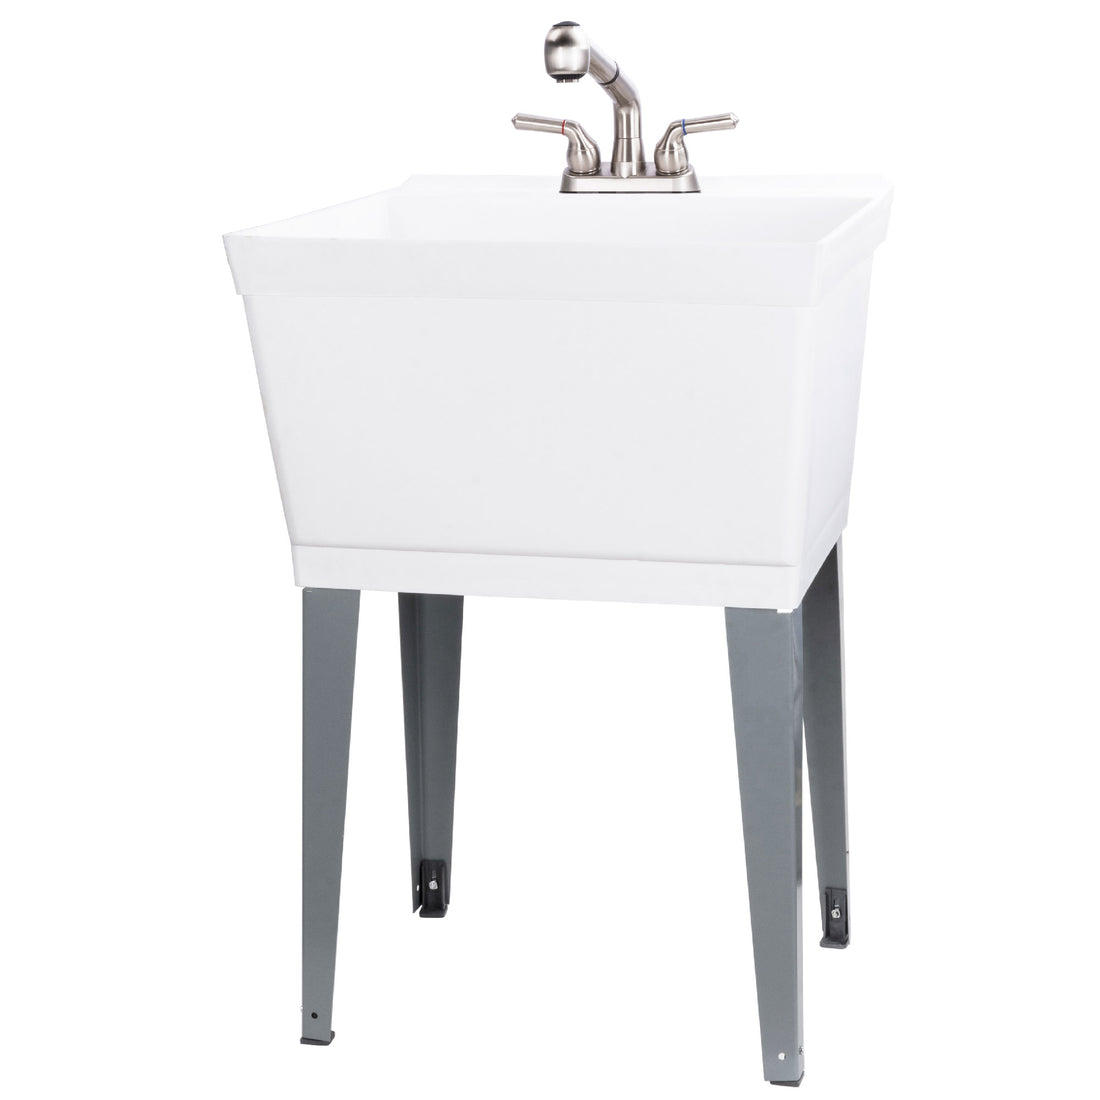 Tehila Standard Freestanding White Utility Sink with Stainless Steel Finish Pull-Out Faucet - Utility sinks vanites Tehila